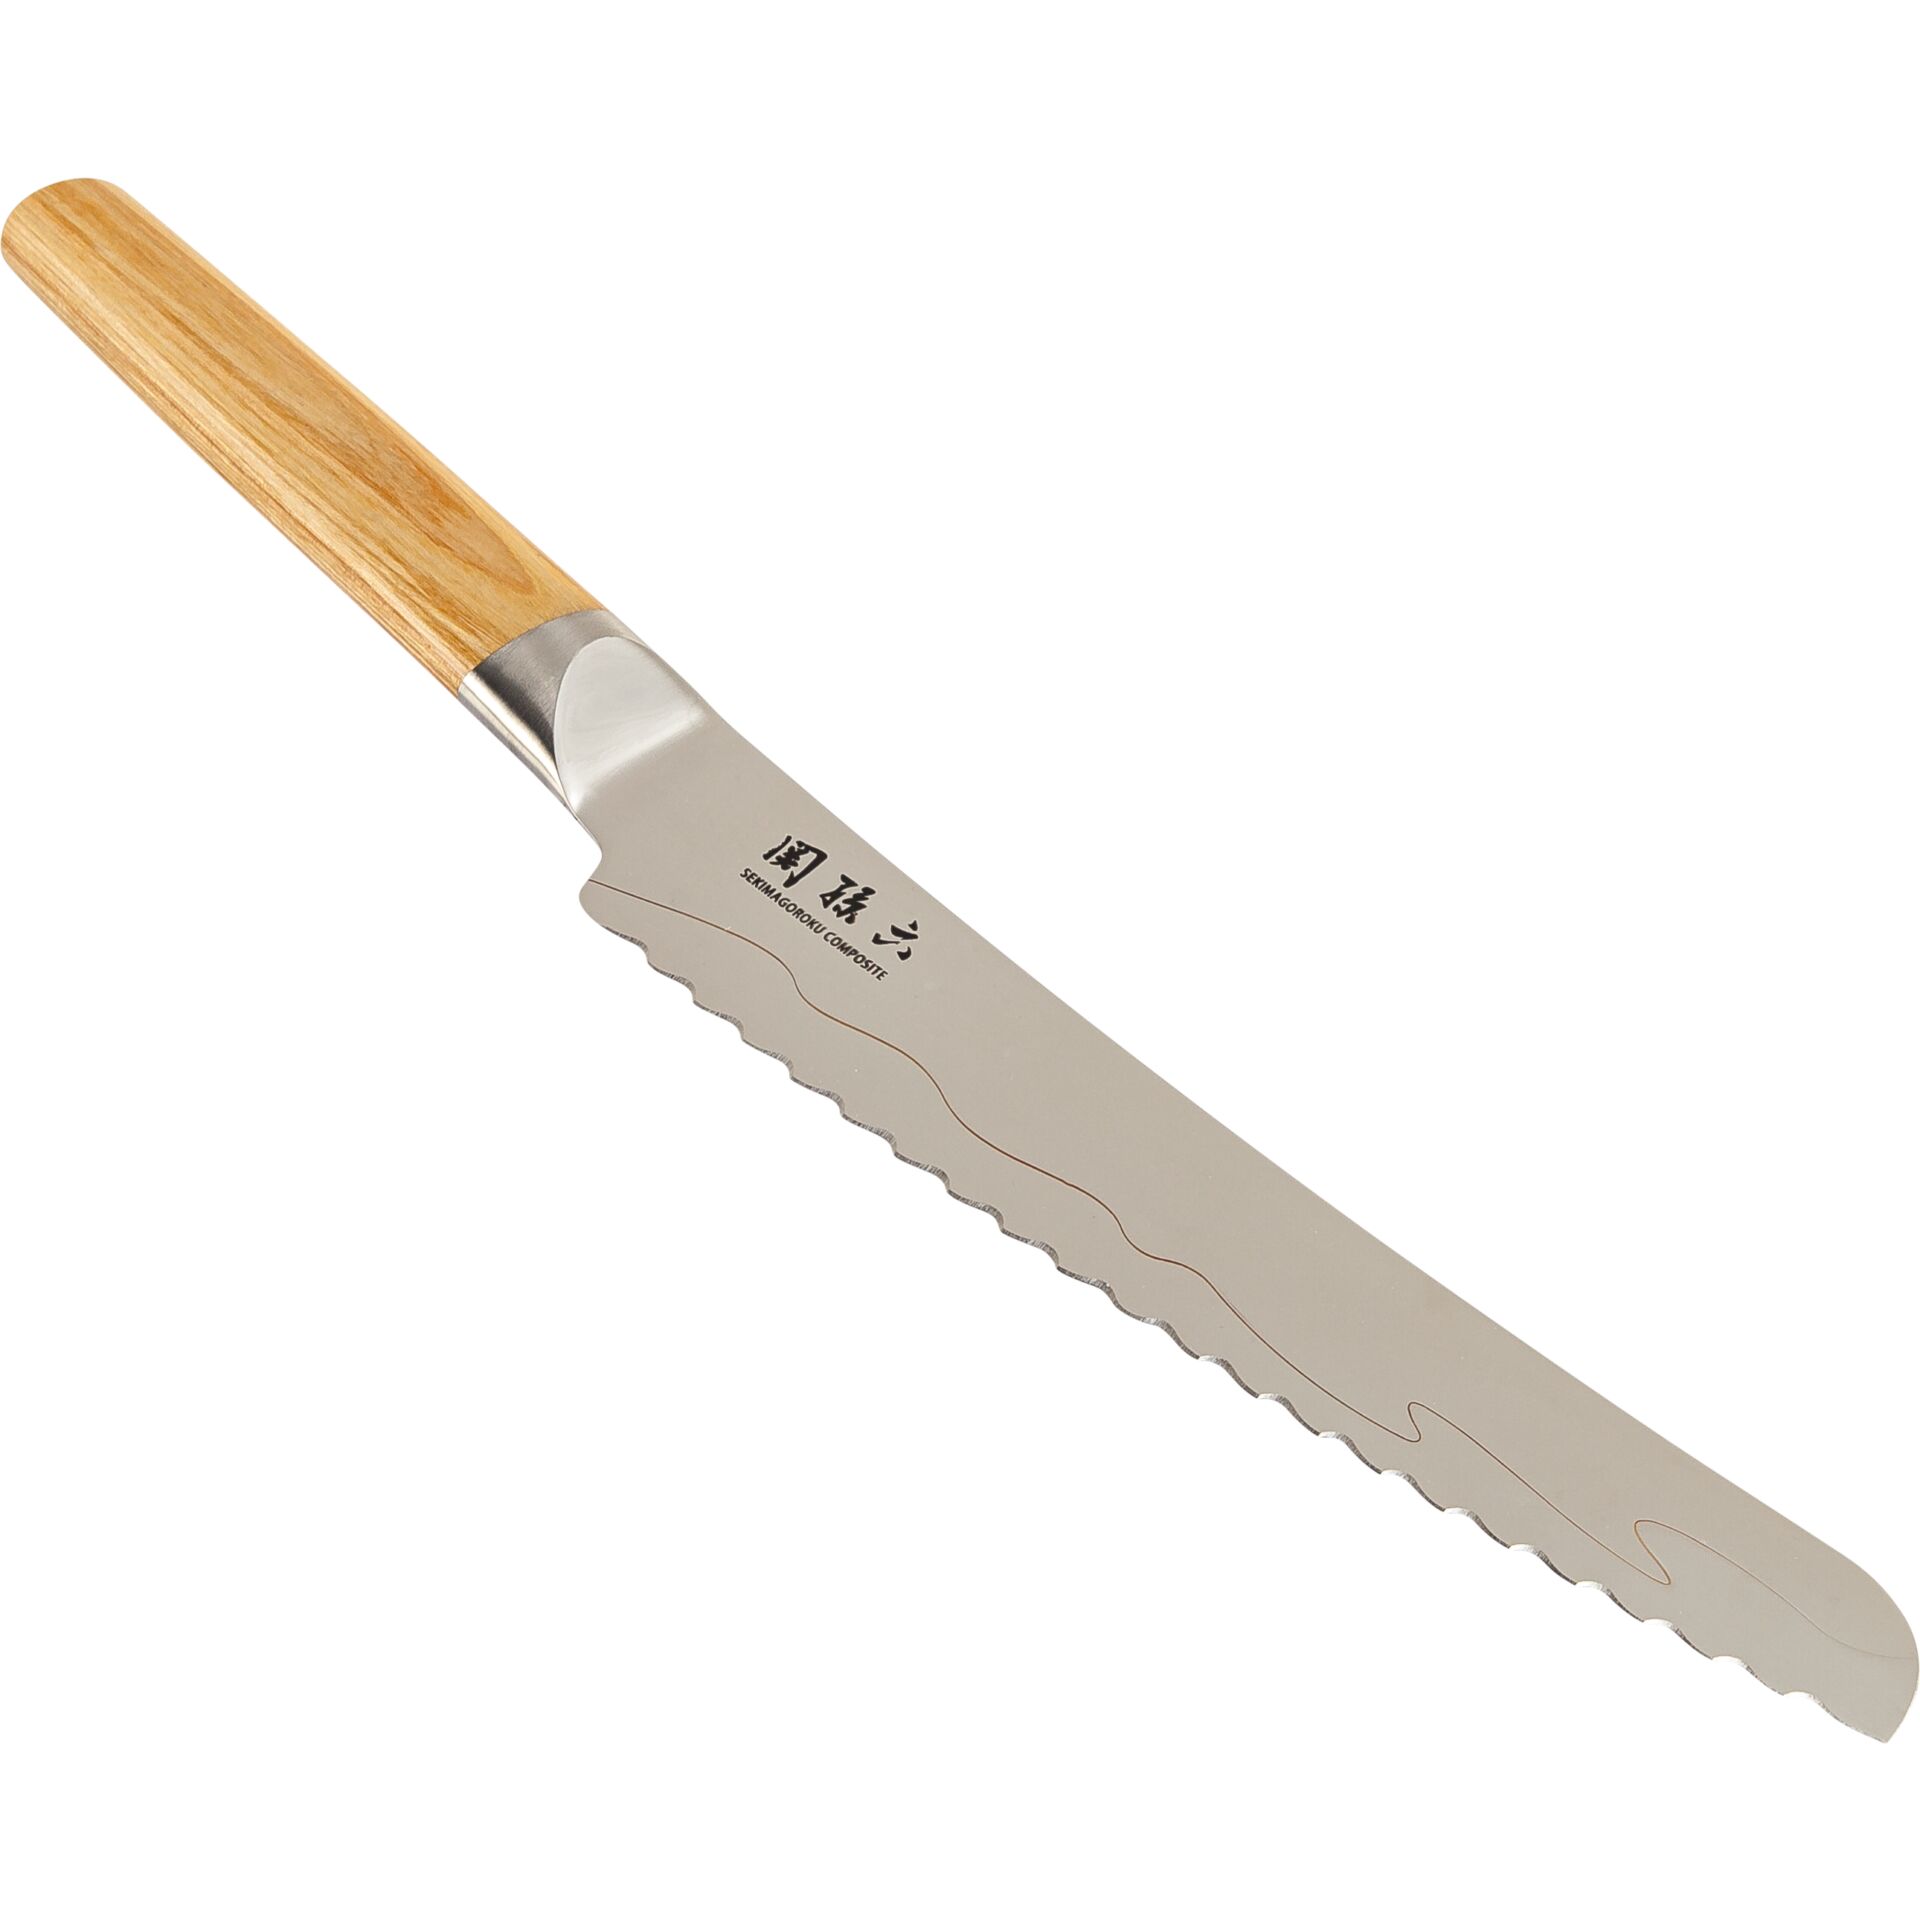 KAI Seki Magoroku Composite Bread Knife, 23 cm